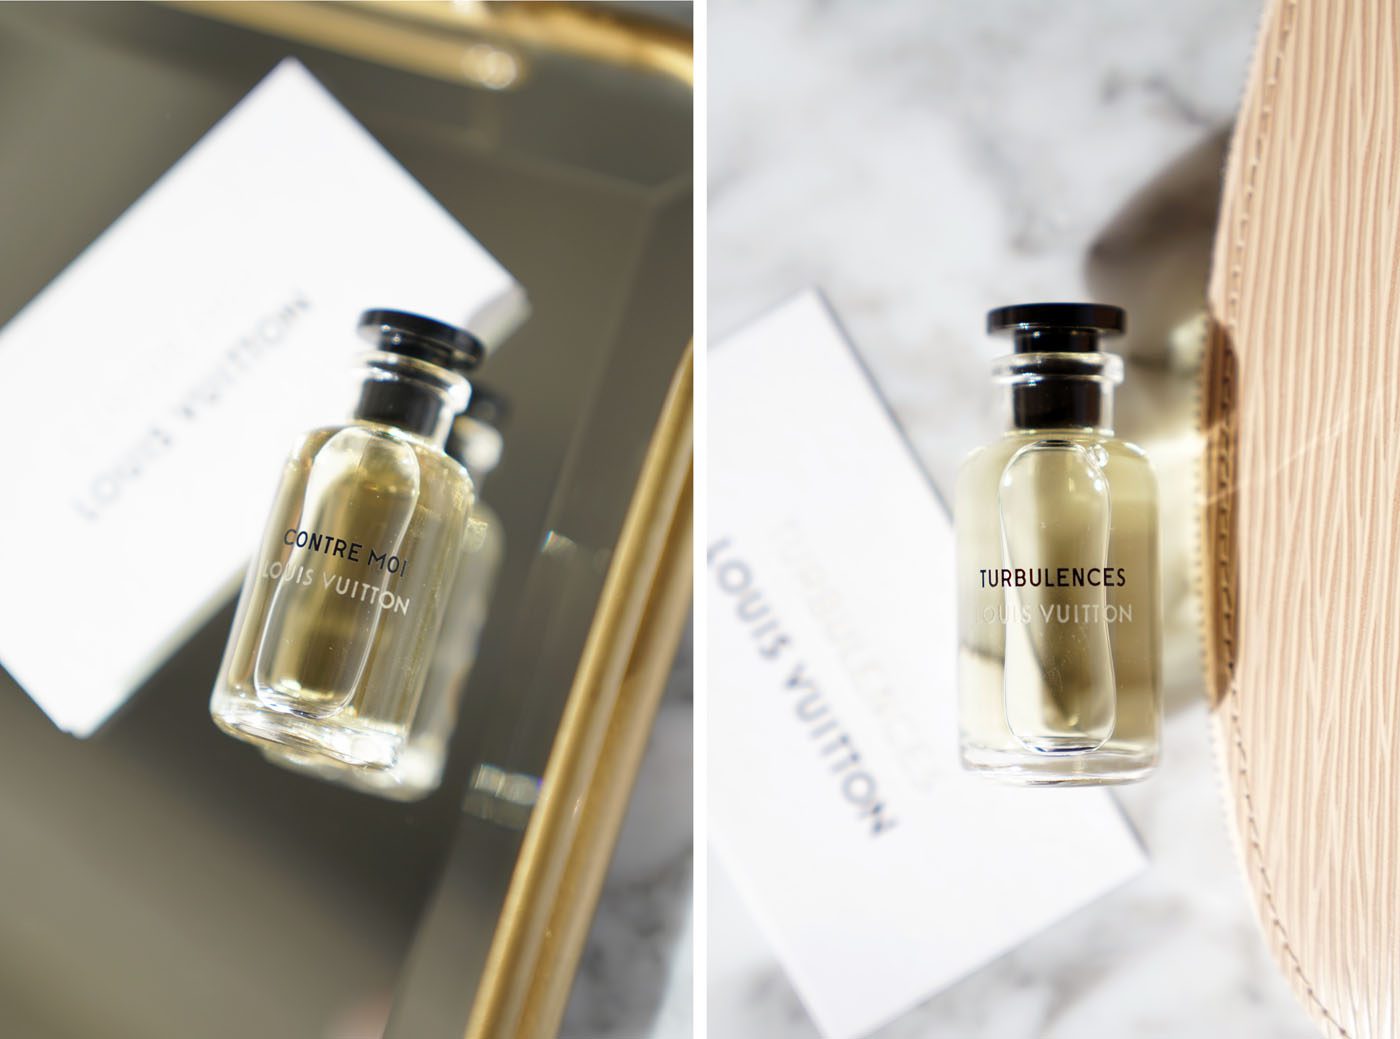 Louis Vuitton Perfume Mini Contre Moi and Turbulences